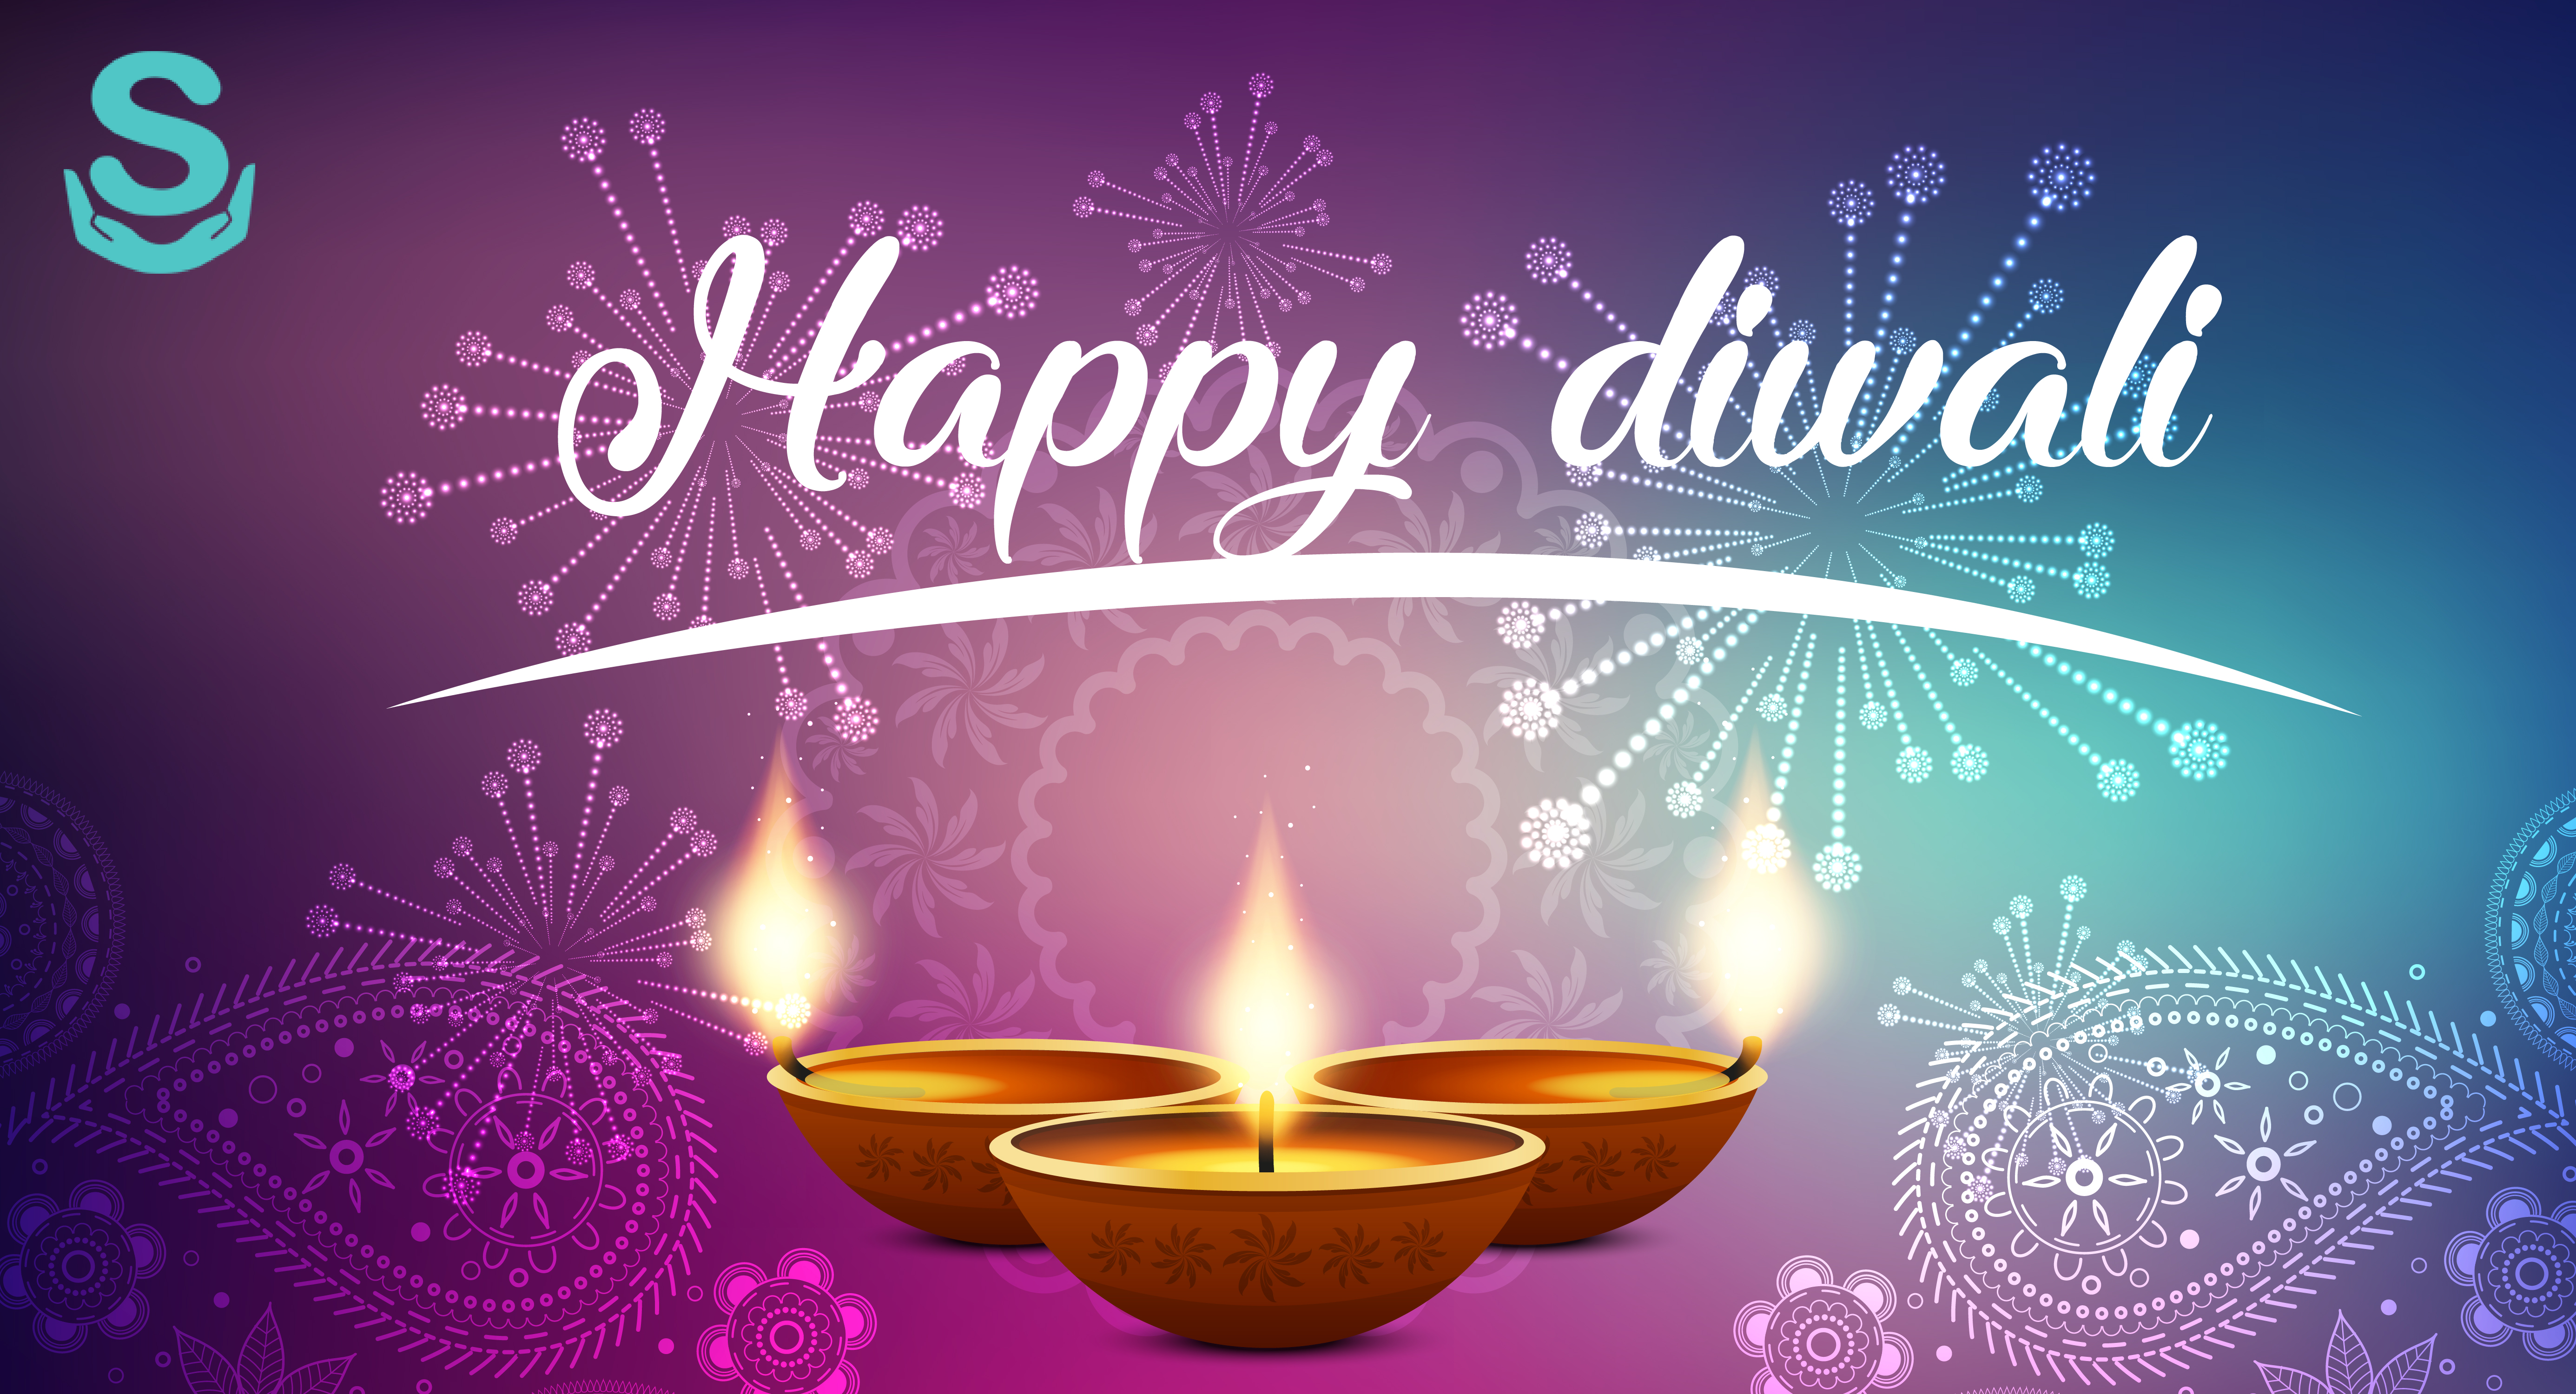 fond d'écran diwali 2017,diwali,vacances,texte,violet,réveillon de noël